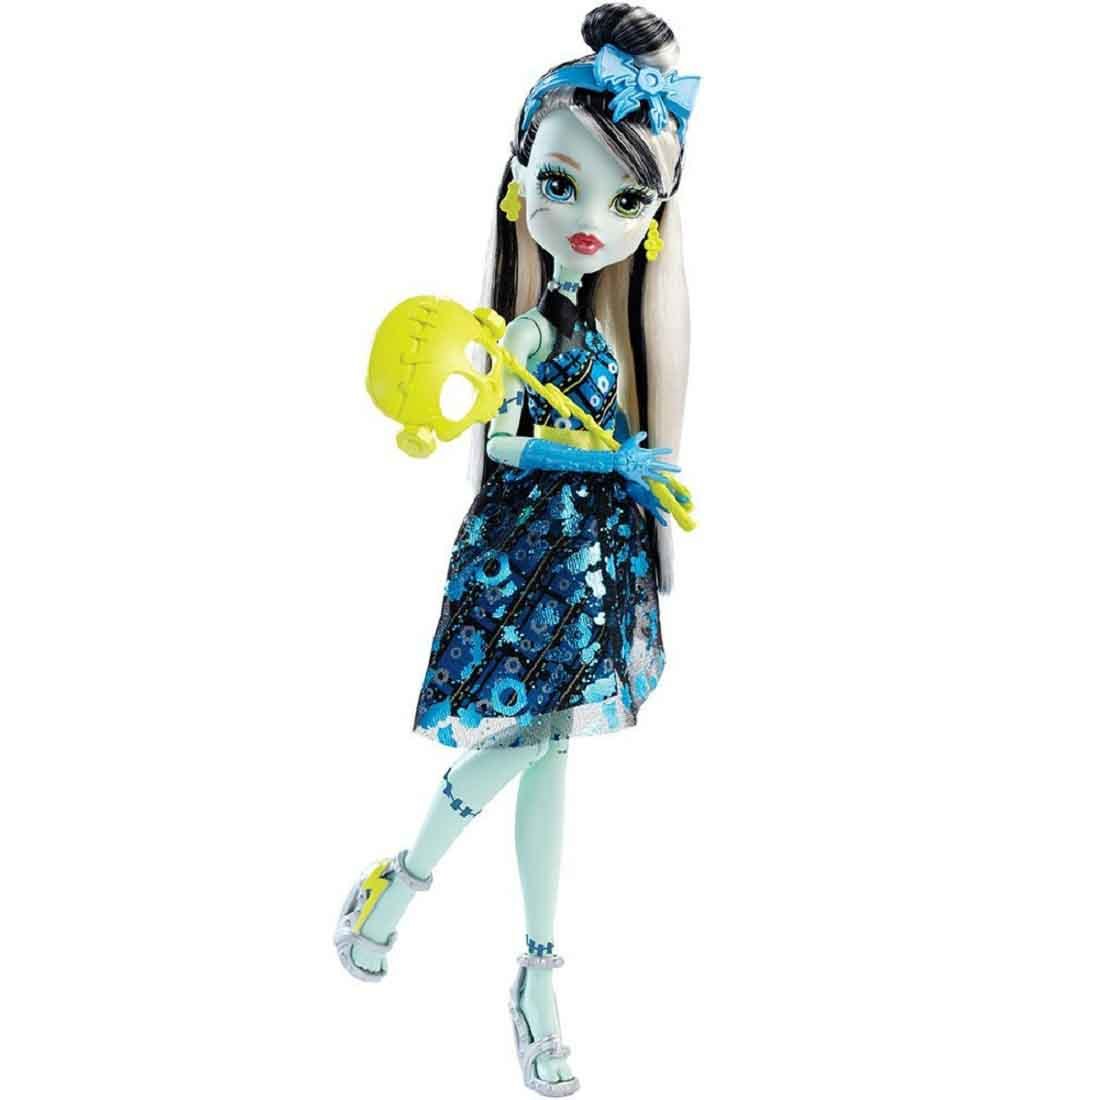 Кукла фрэнки штейн. Фрэнки Монстер Хай кукла. Фрэнки Штейн кукла. Куклы Monster High Frankie Stein Doll. Monster High Frankie Stein кукла.